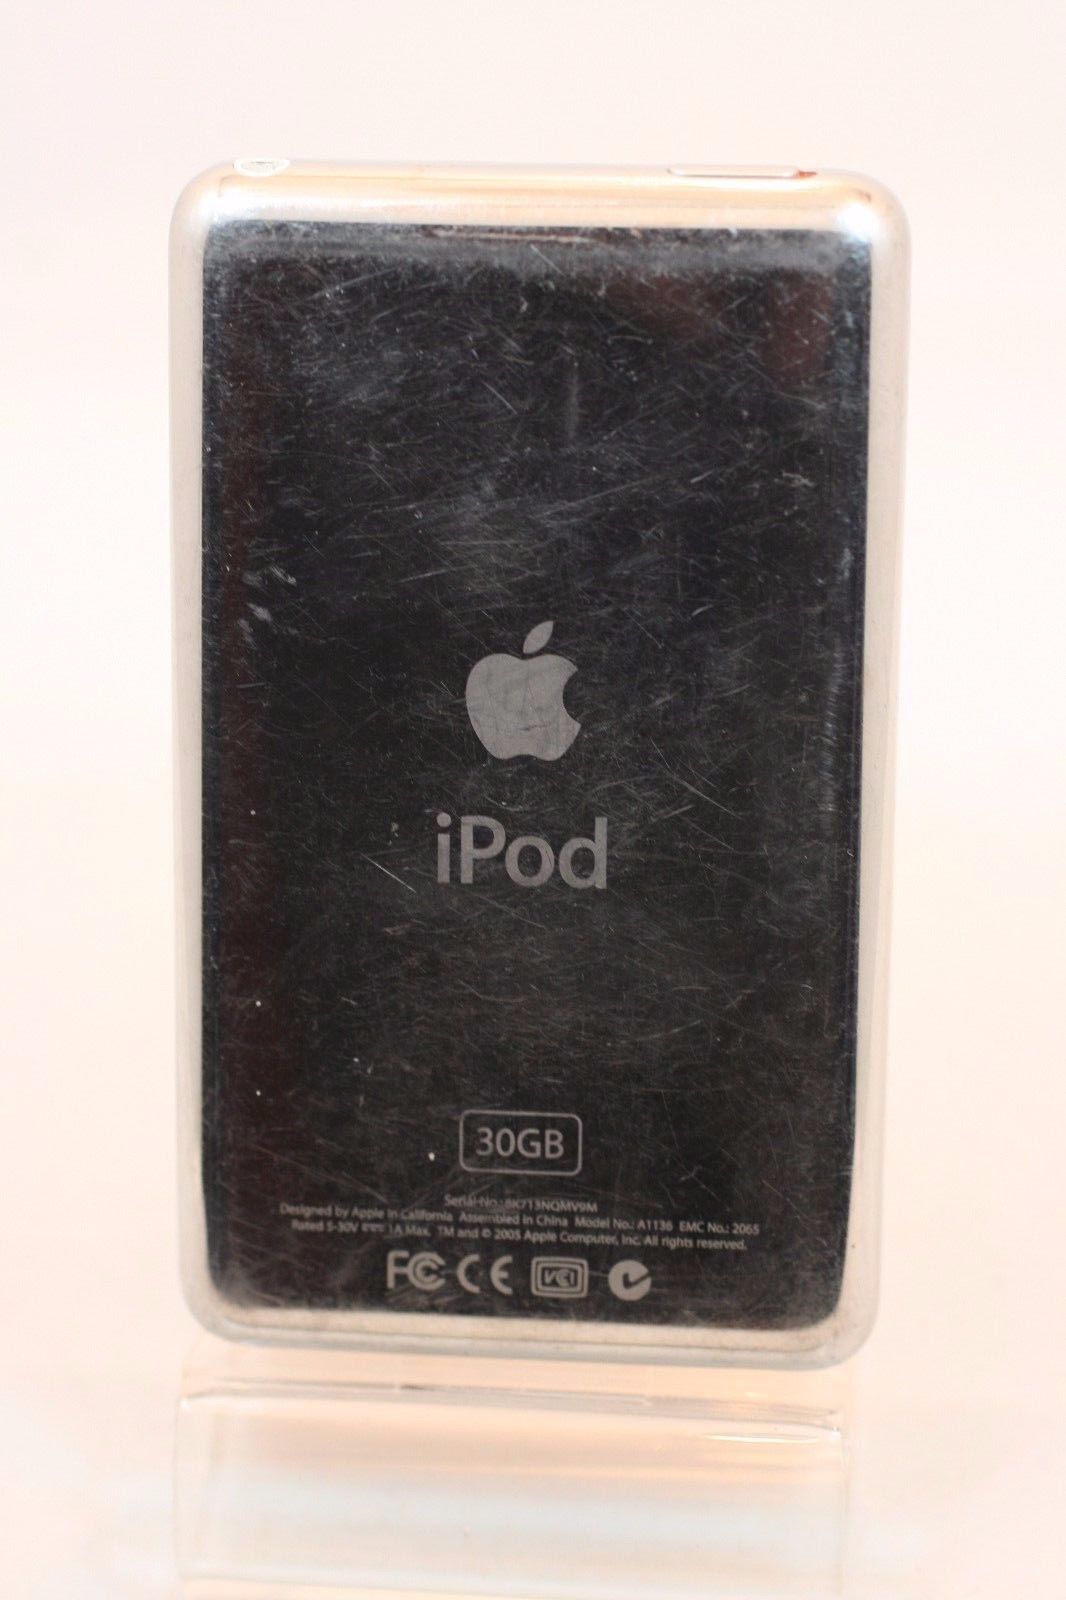 Apple ipod 30gb model a1136